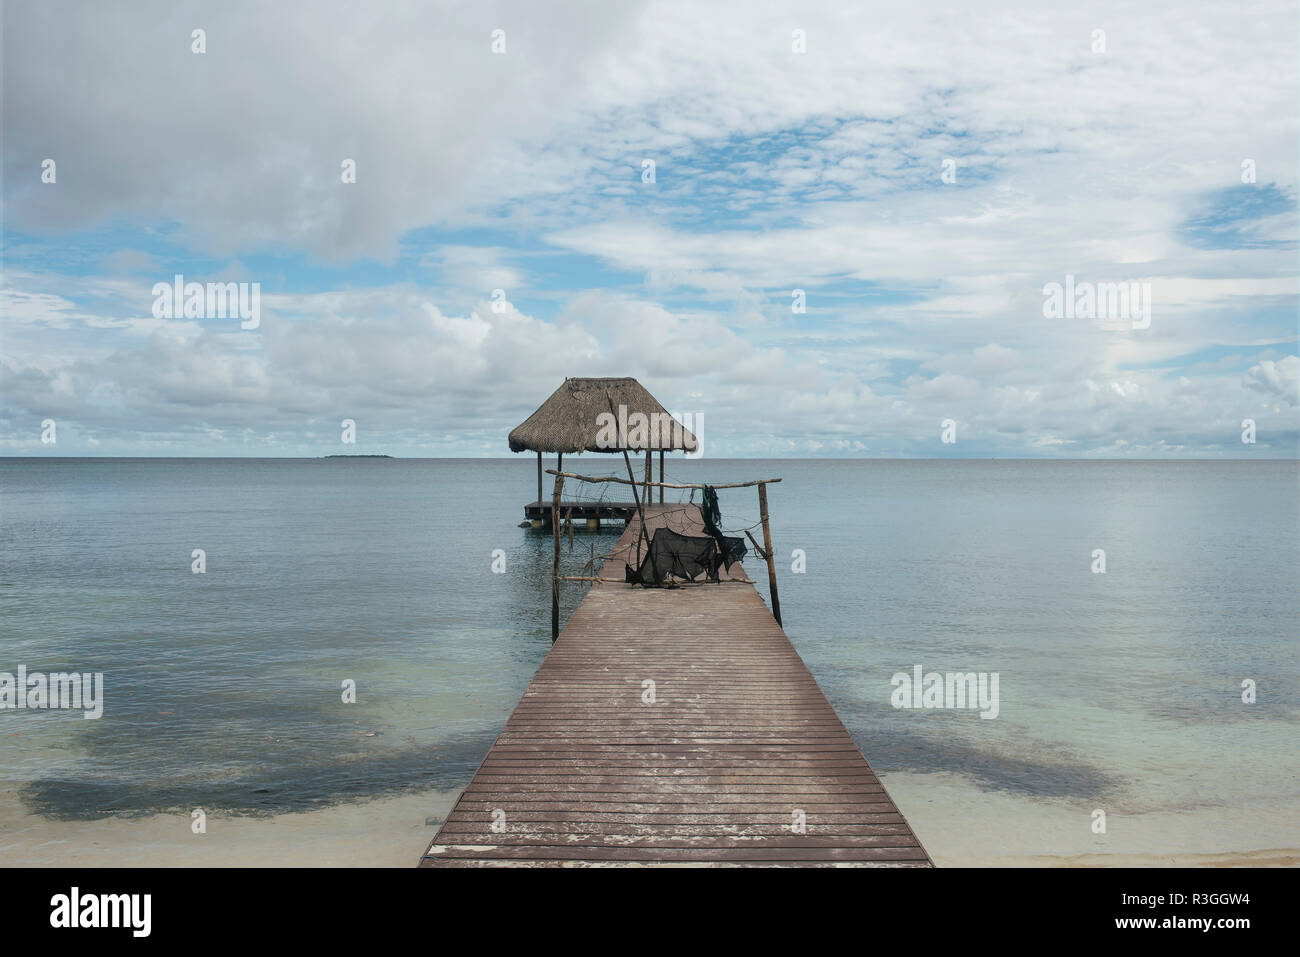 Dock with cabana (mangrove pavilion). Minimalistic waterscape of Isla Grande, Rosario Islands. Cartagena de Indias, Colombia. Oct 2018 Stock Photo